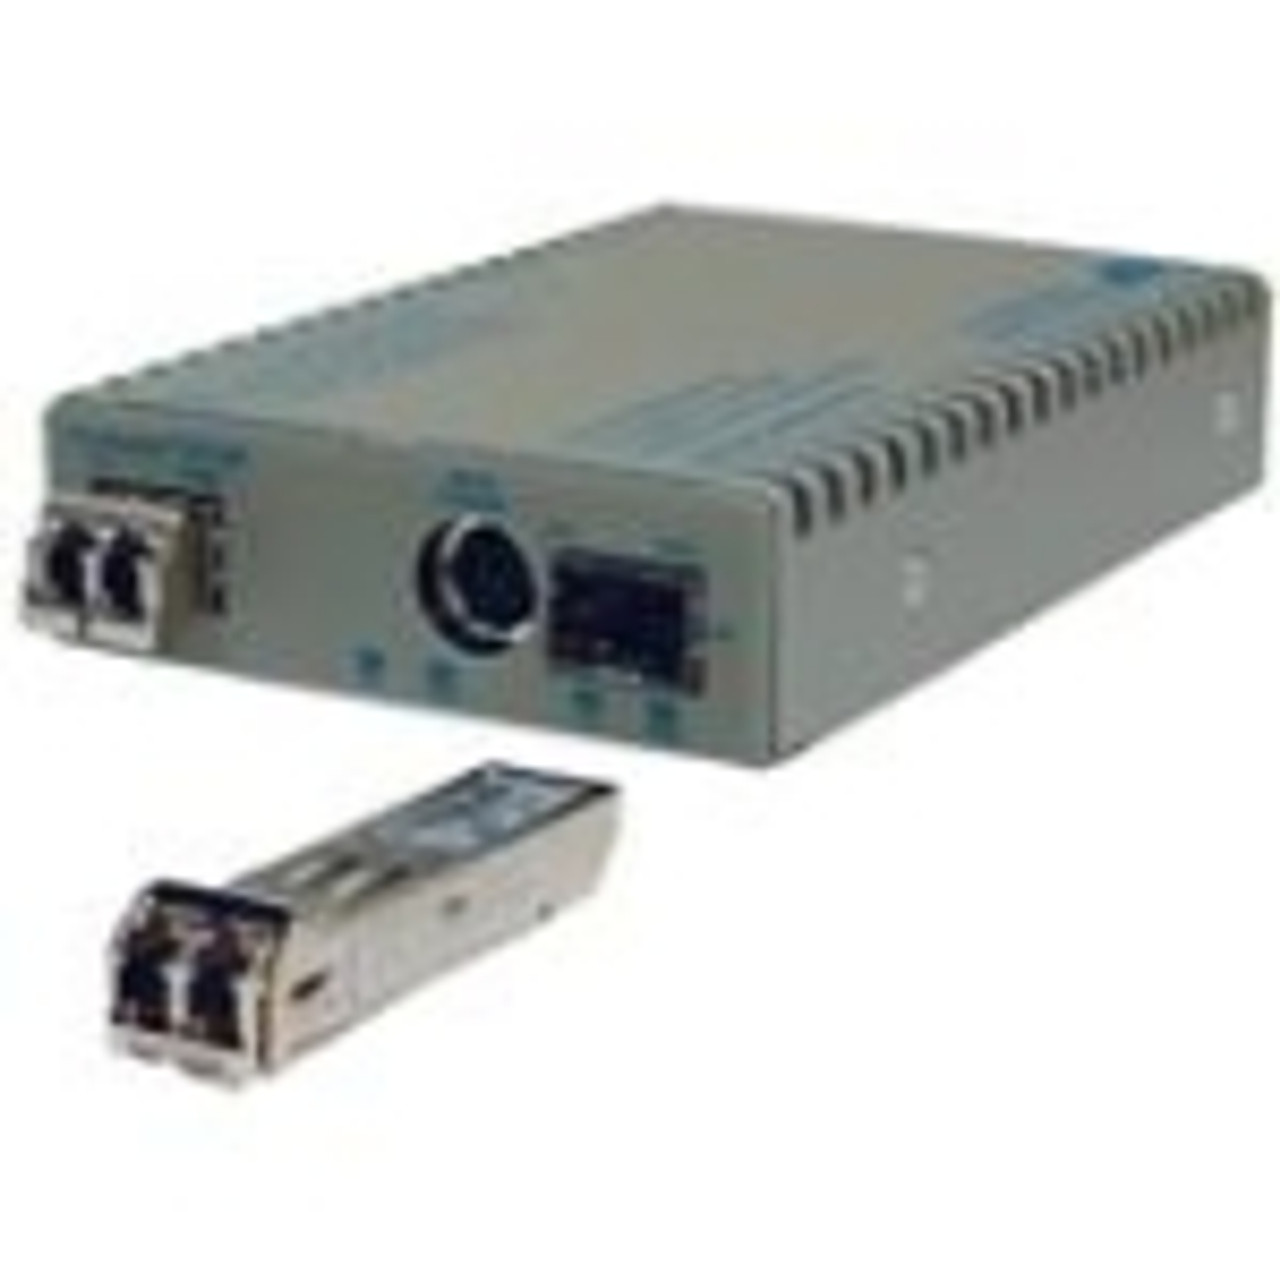 7133-1 Omnitron Systems 100Mbps 100Base-X CWDM Single-mode Fiber 60km 1331nm LC Connector SFP Transceiver Module